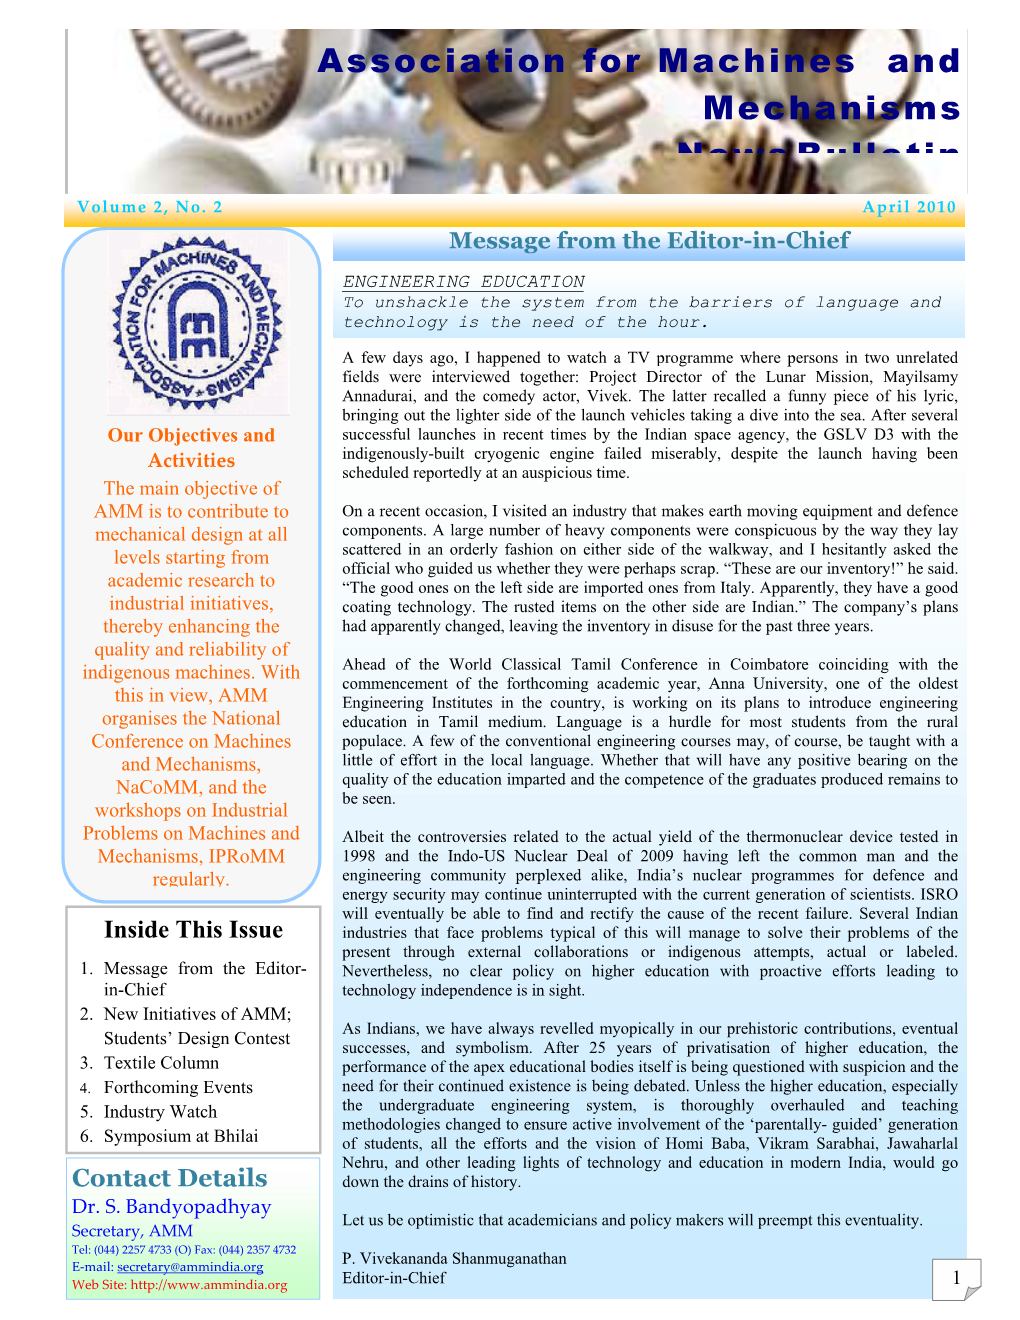 Association for Machines and Mechanisms News Bulletin